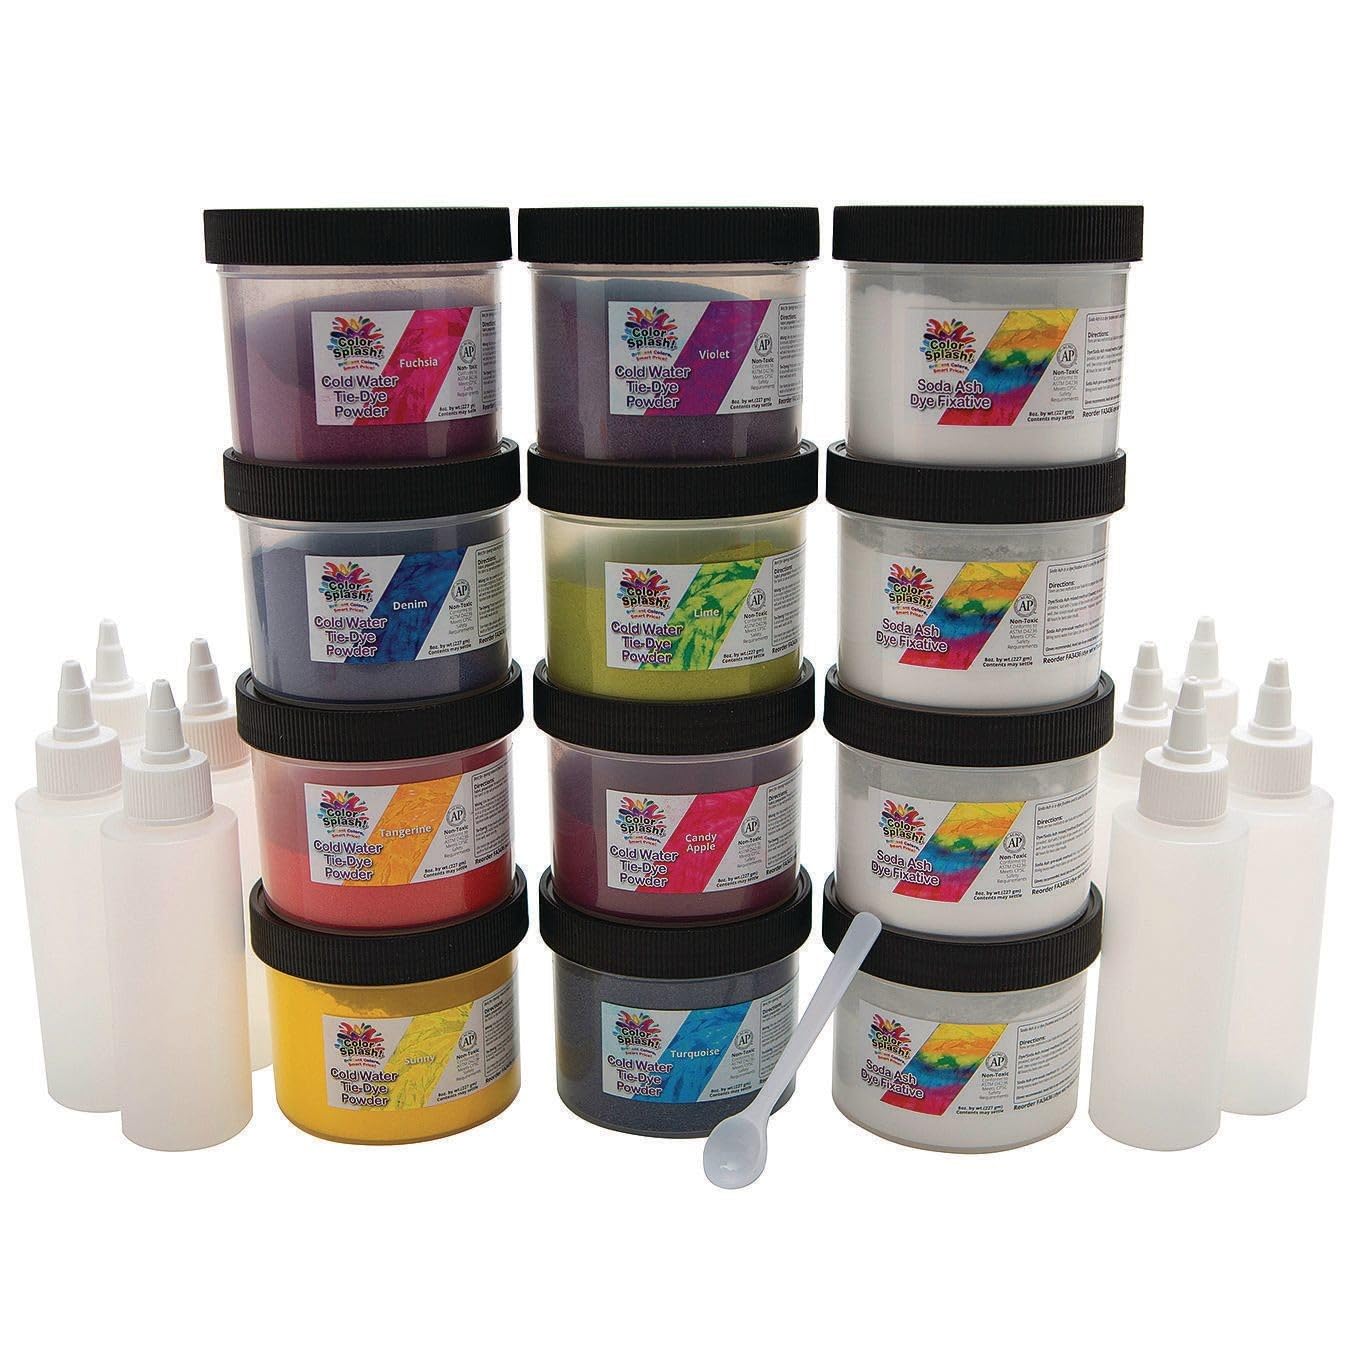 S&S Worldwide Color Splash! Cold Water Tie Dye, 8 Colors Dye Powder + Soda Ash, 8oz Jars, Applicator Bottles, Measure Scoop, Just Add Water, For Groups, Tie-Dye, Batik, Ice Dye, Non-Toxic, 12 Jar Set